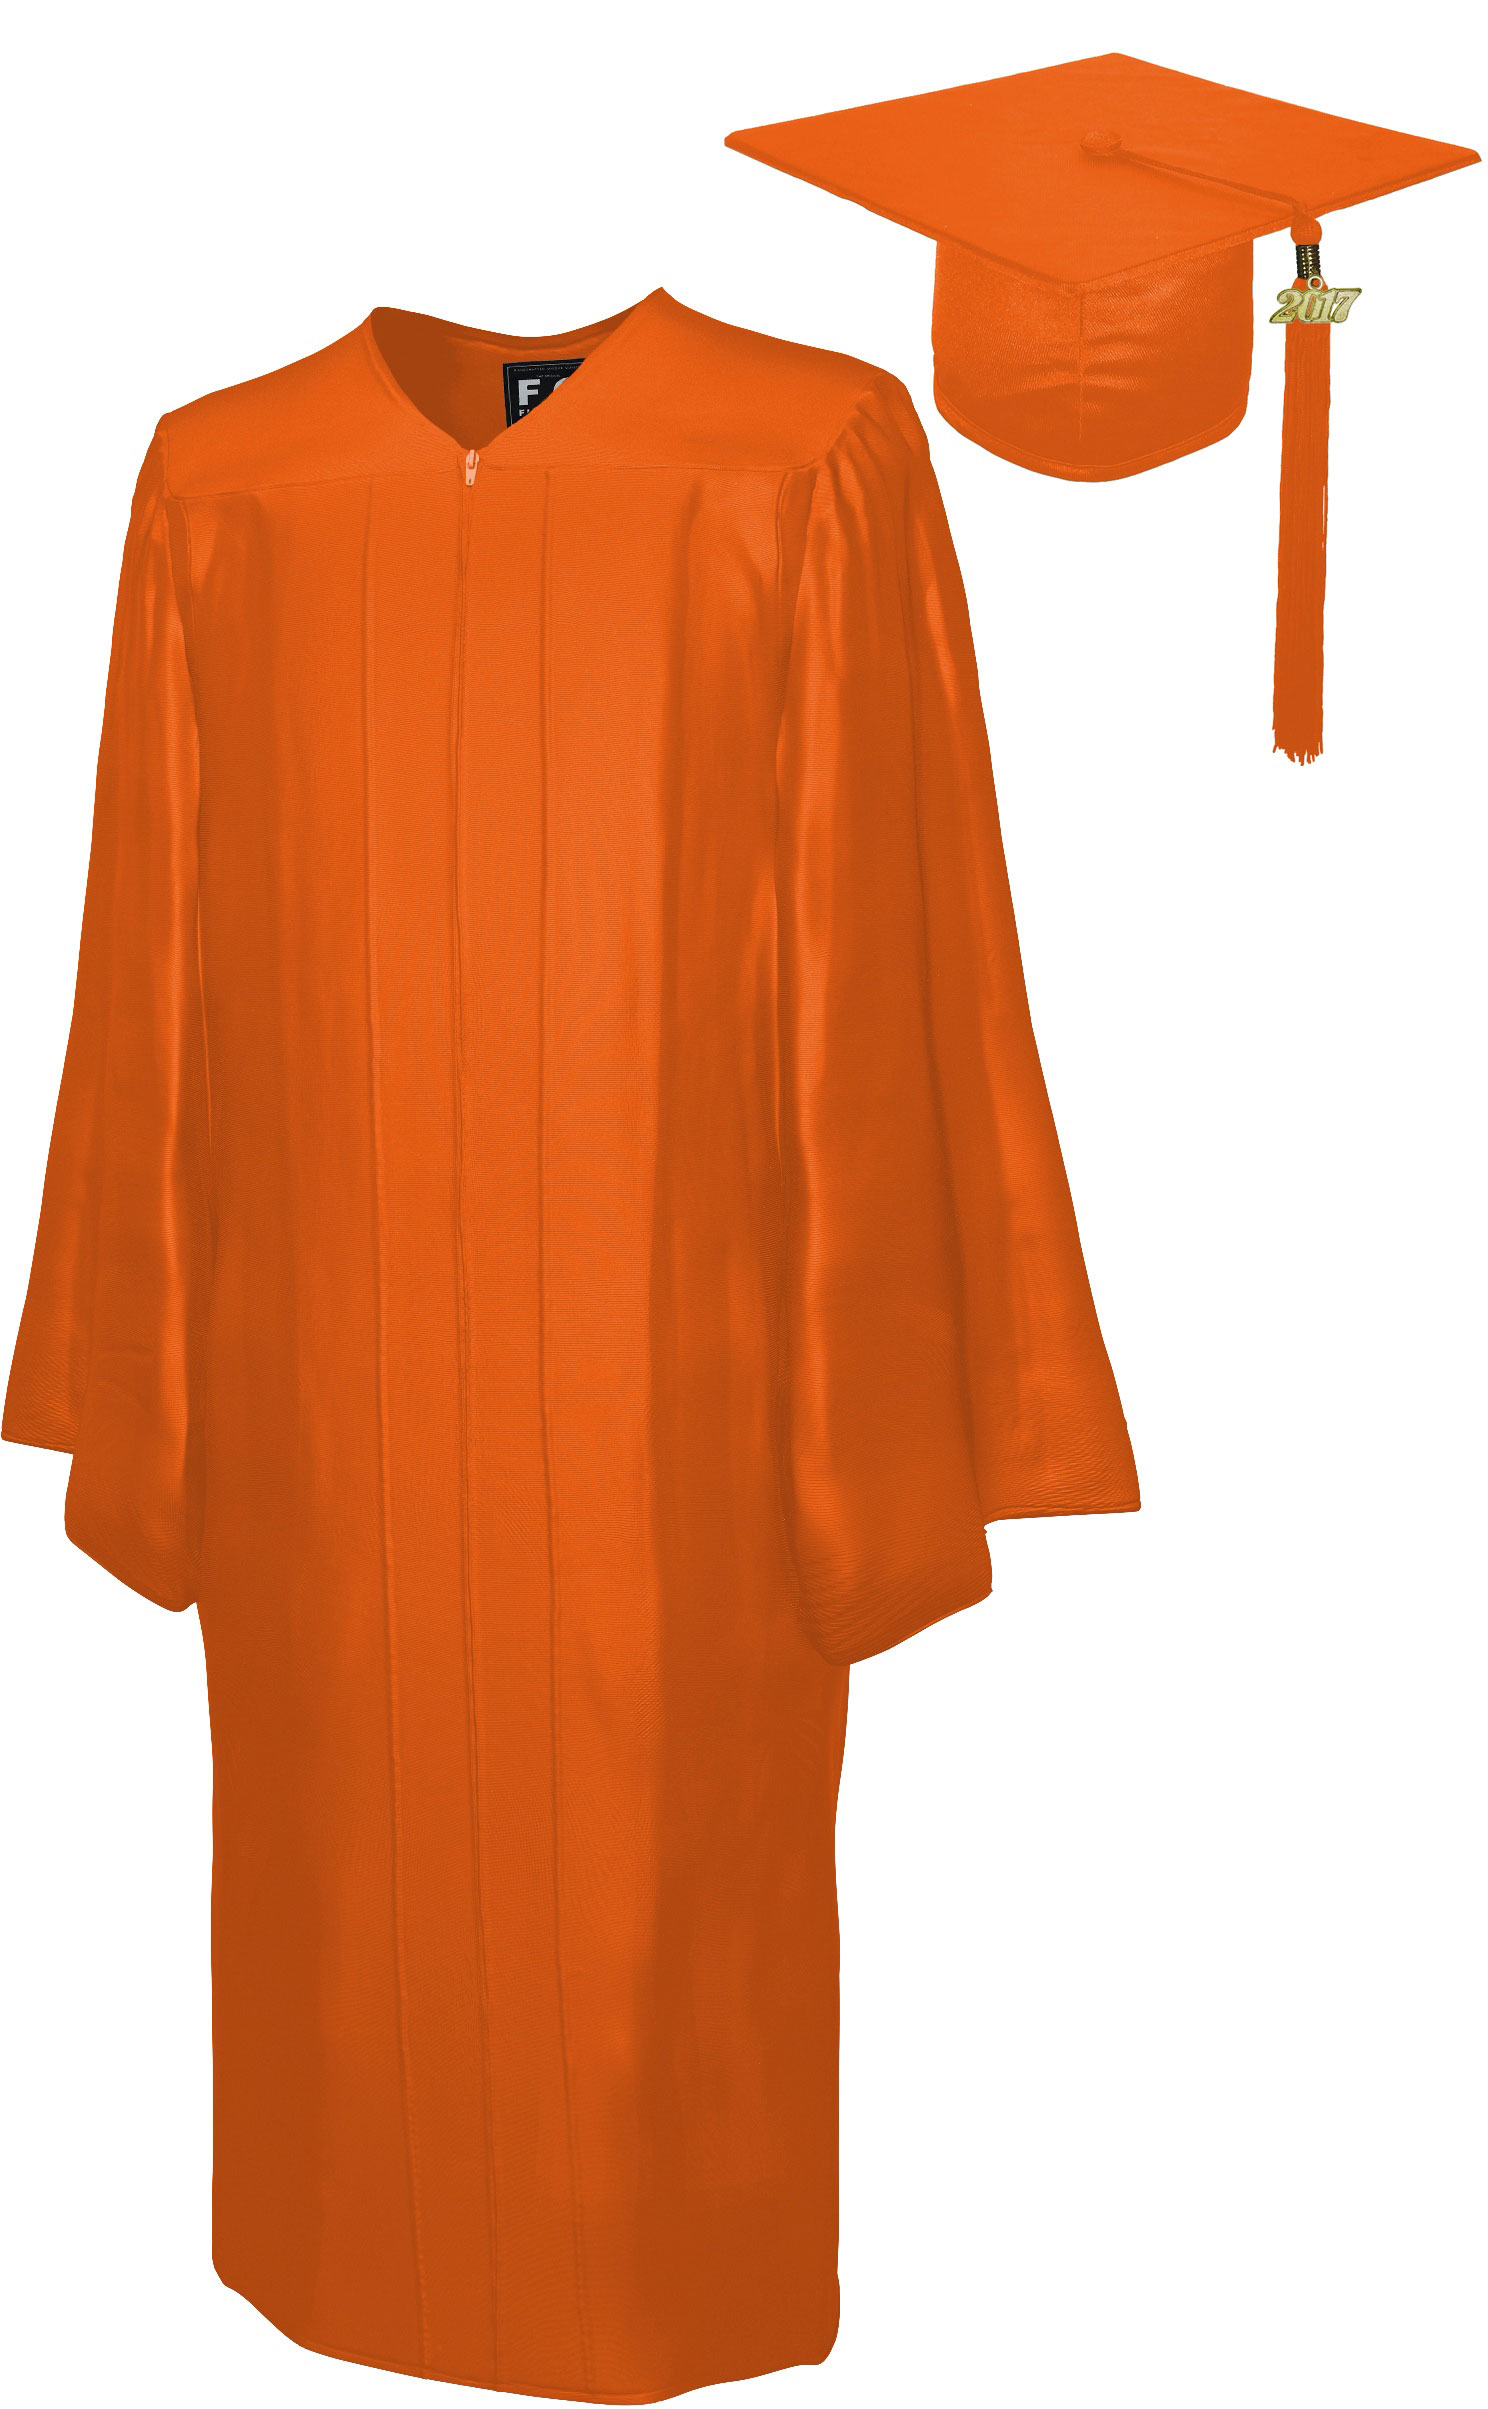 orange dress for graduation